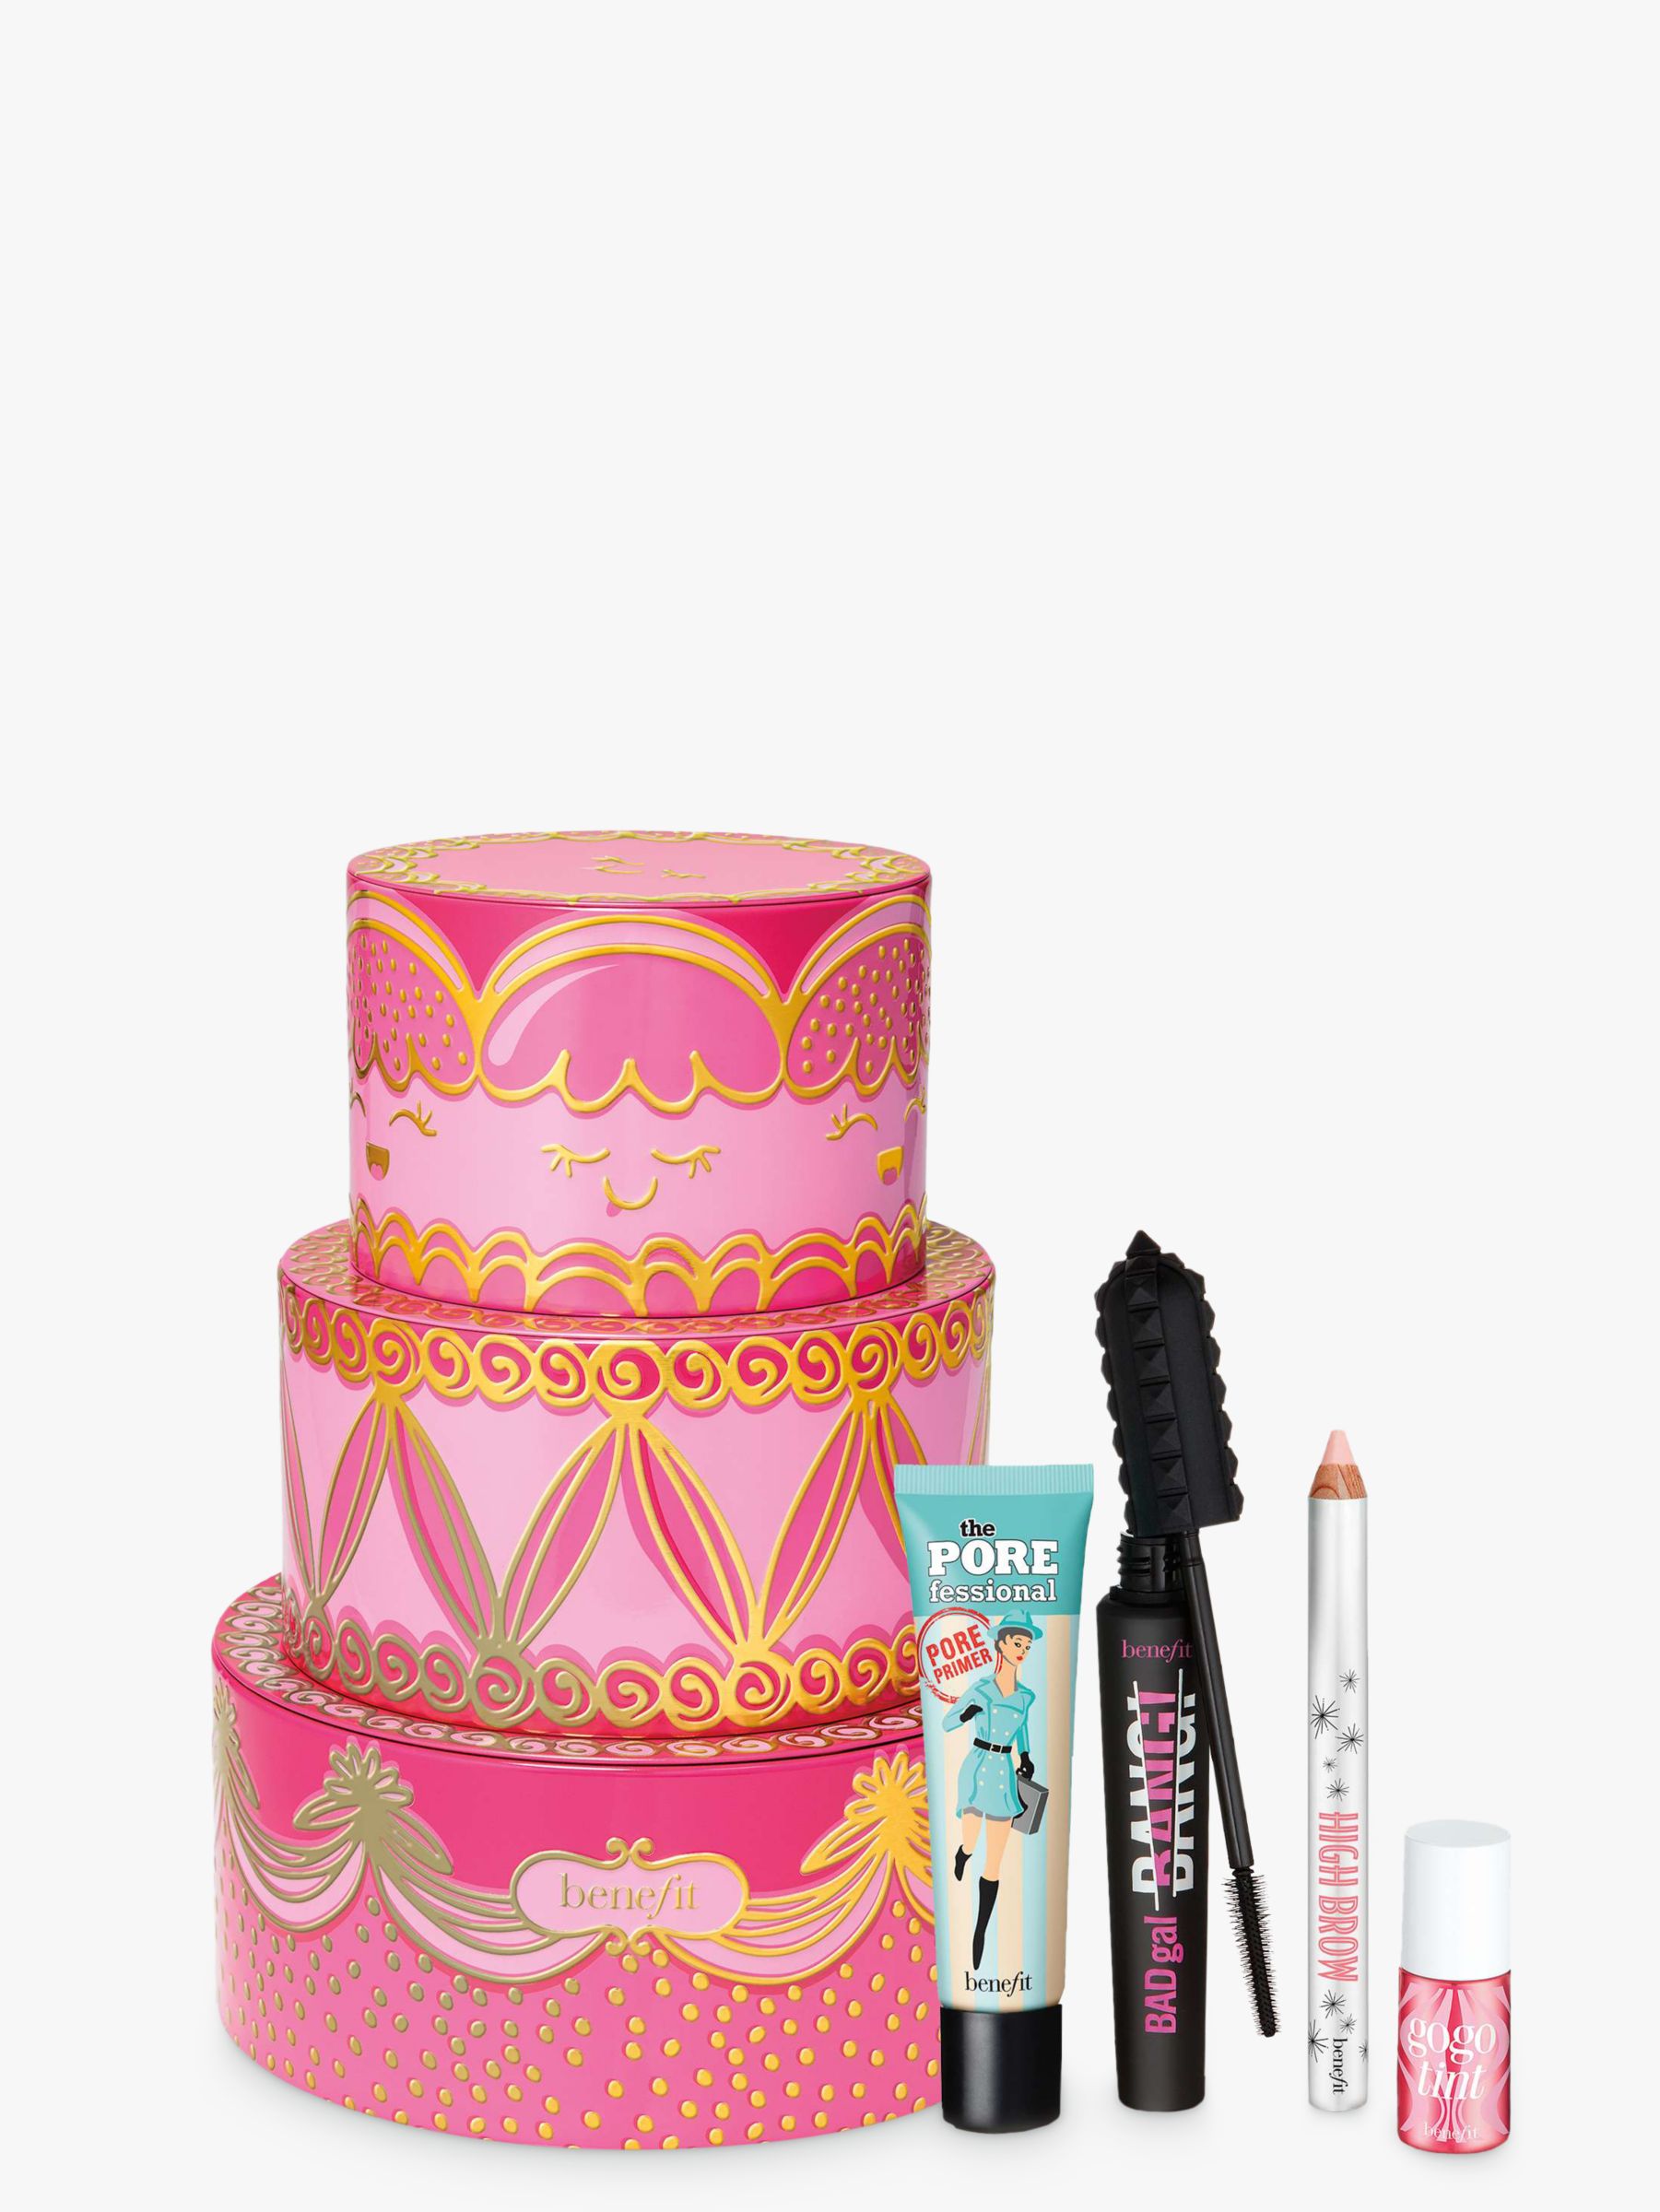 benefit makeup gift box